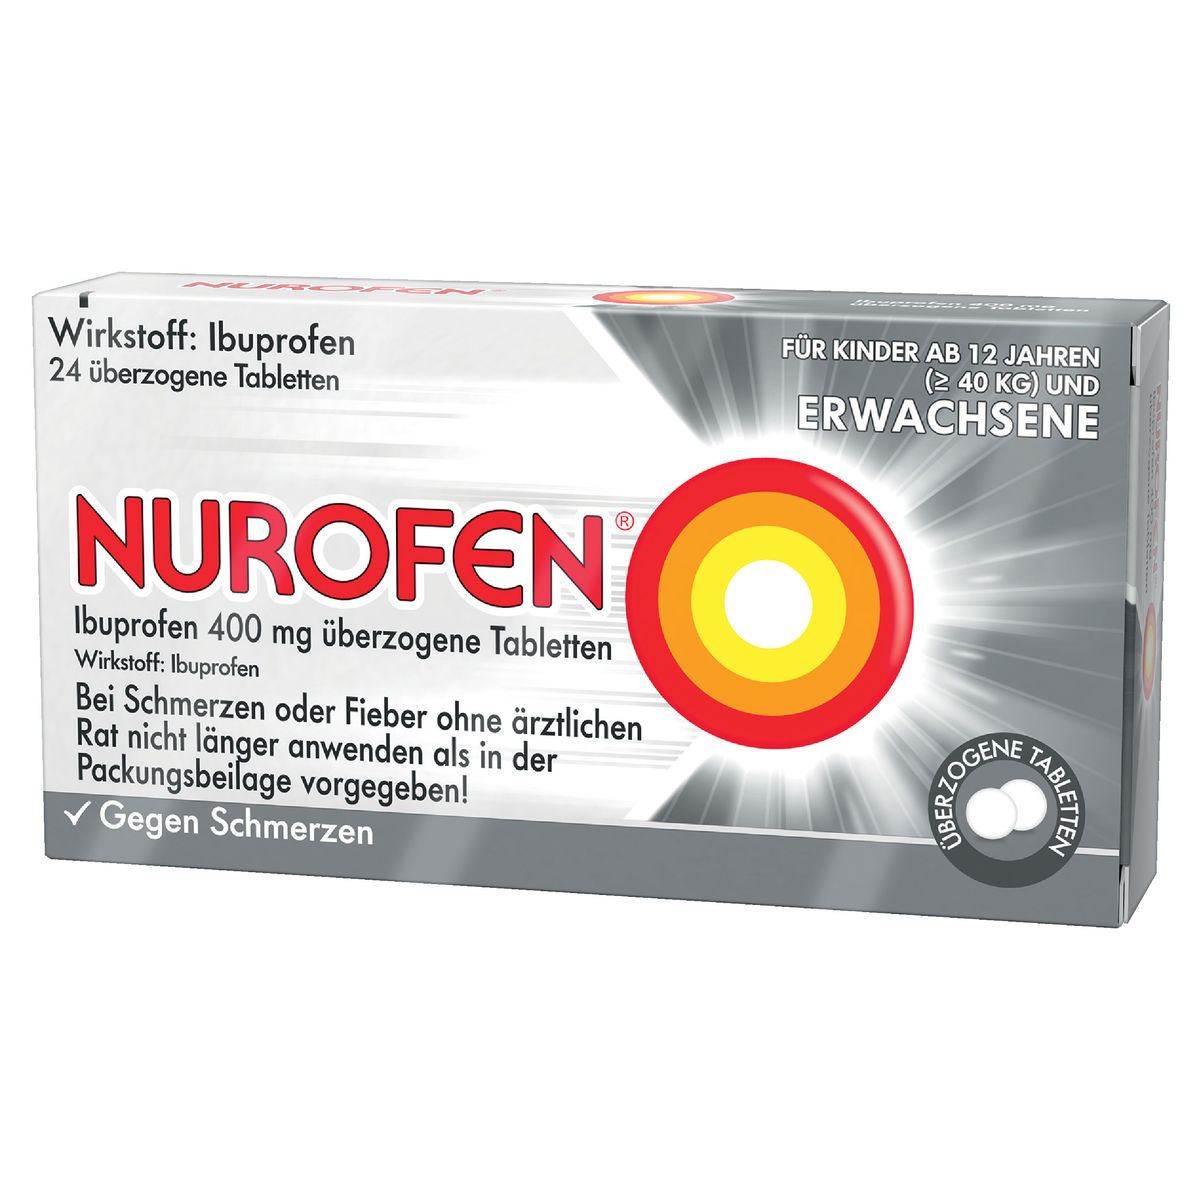 NUROFEN Ibuprofen 400 mg berzogene Tabletten